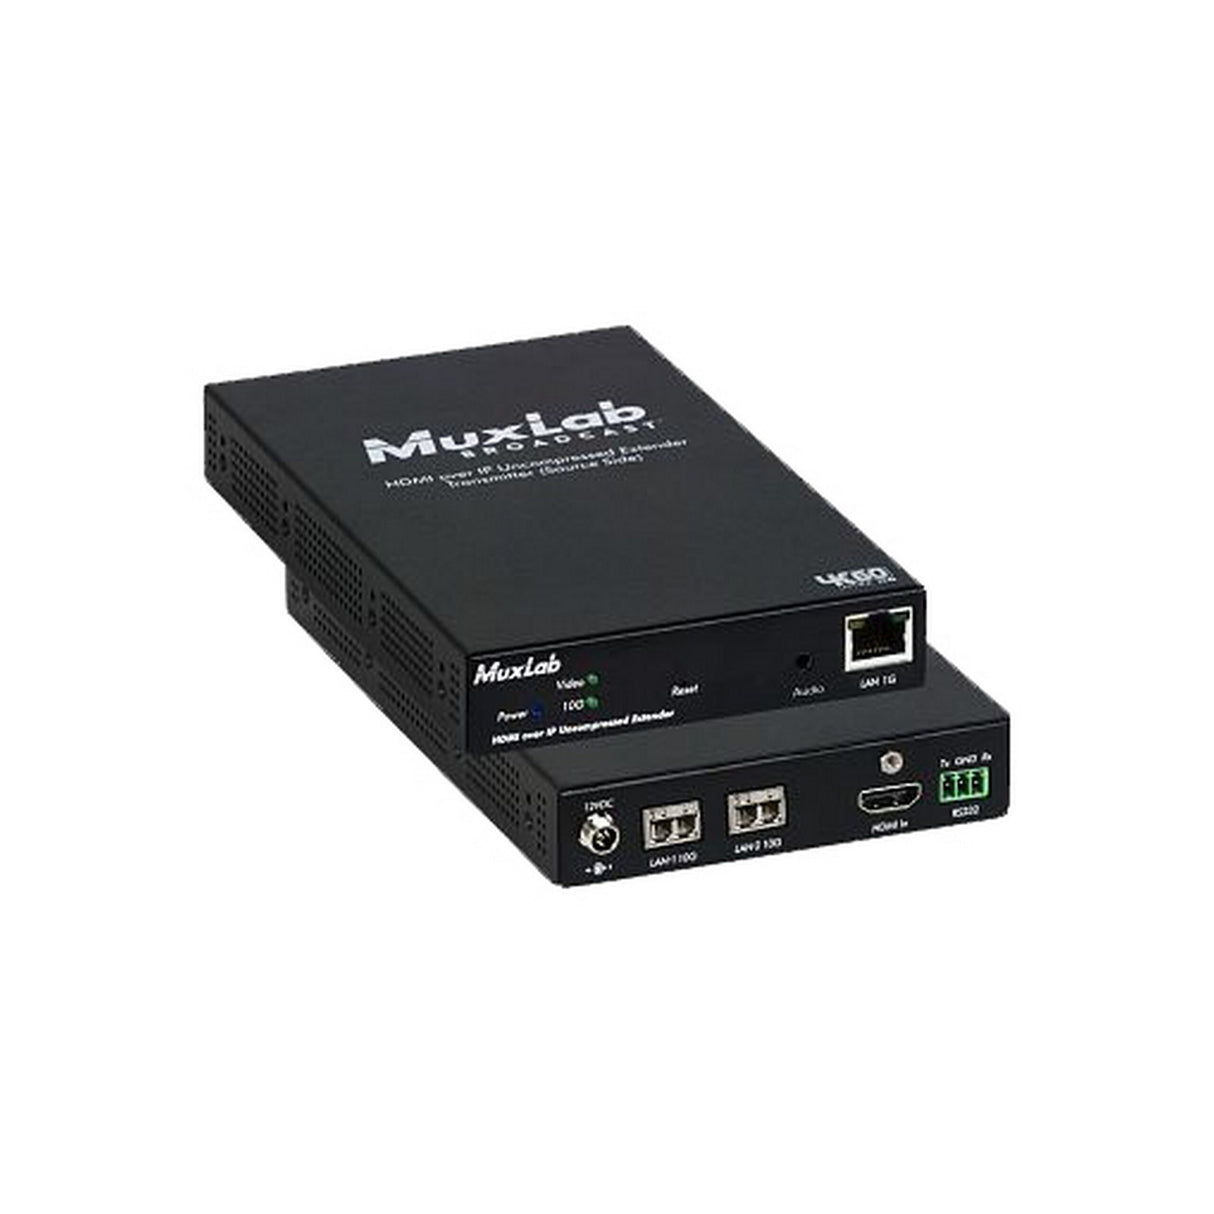 MuxLab 500774-TX-MM HDMI 2.0/ST2110 Over IP Uncompressed Gateway Converter Transmitter, MM